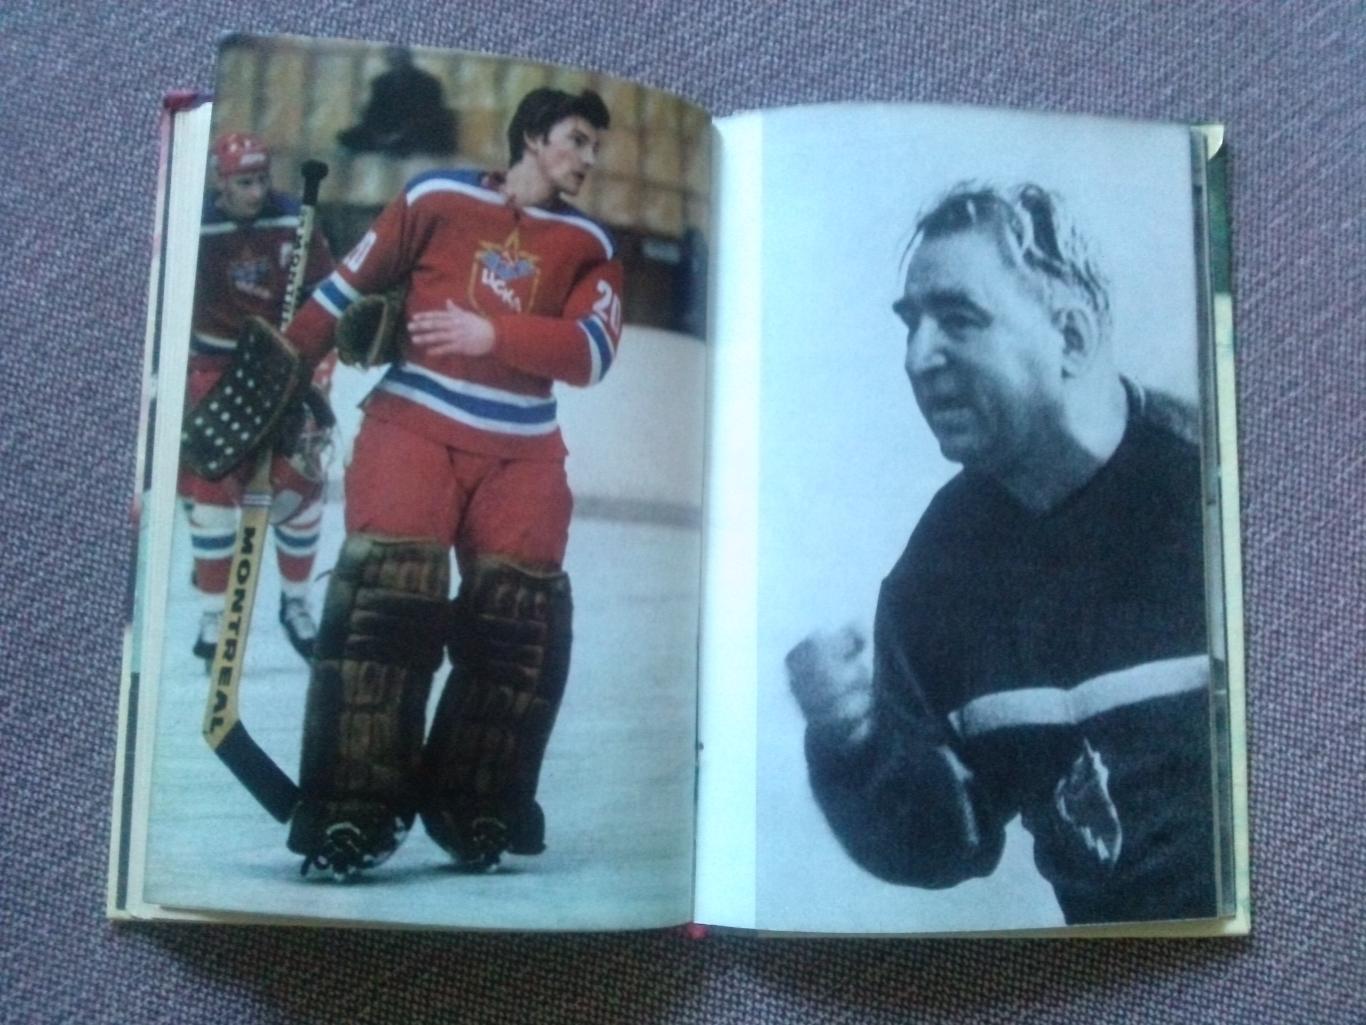 Владислав Третьяк - Когда на льду жарко 1981 г.ХК ЦСКА (Москва) Хоккей Спорт 3